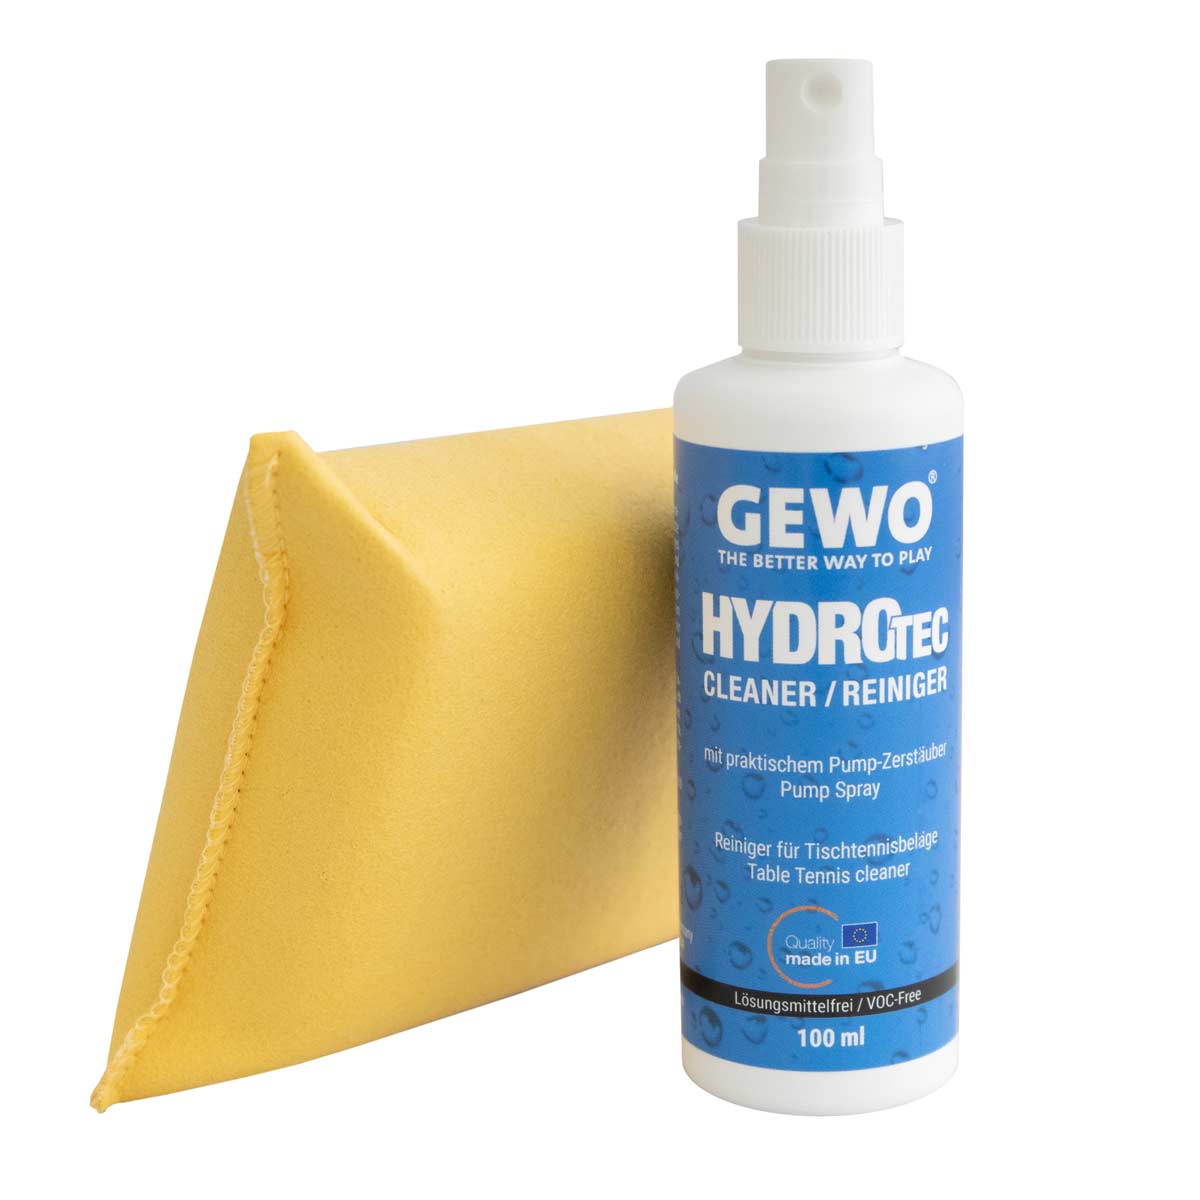 GEWO HydroTec Rubber-Maintenance-Set